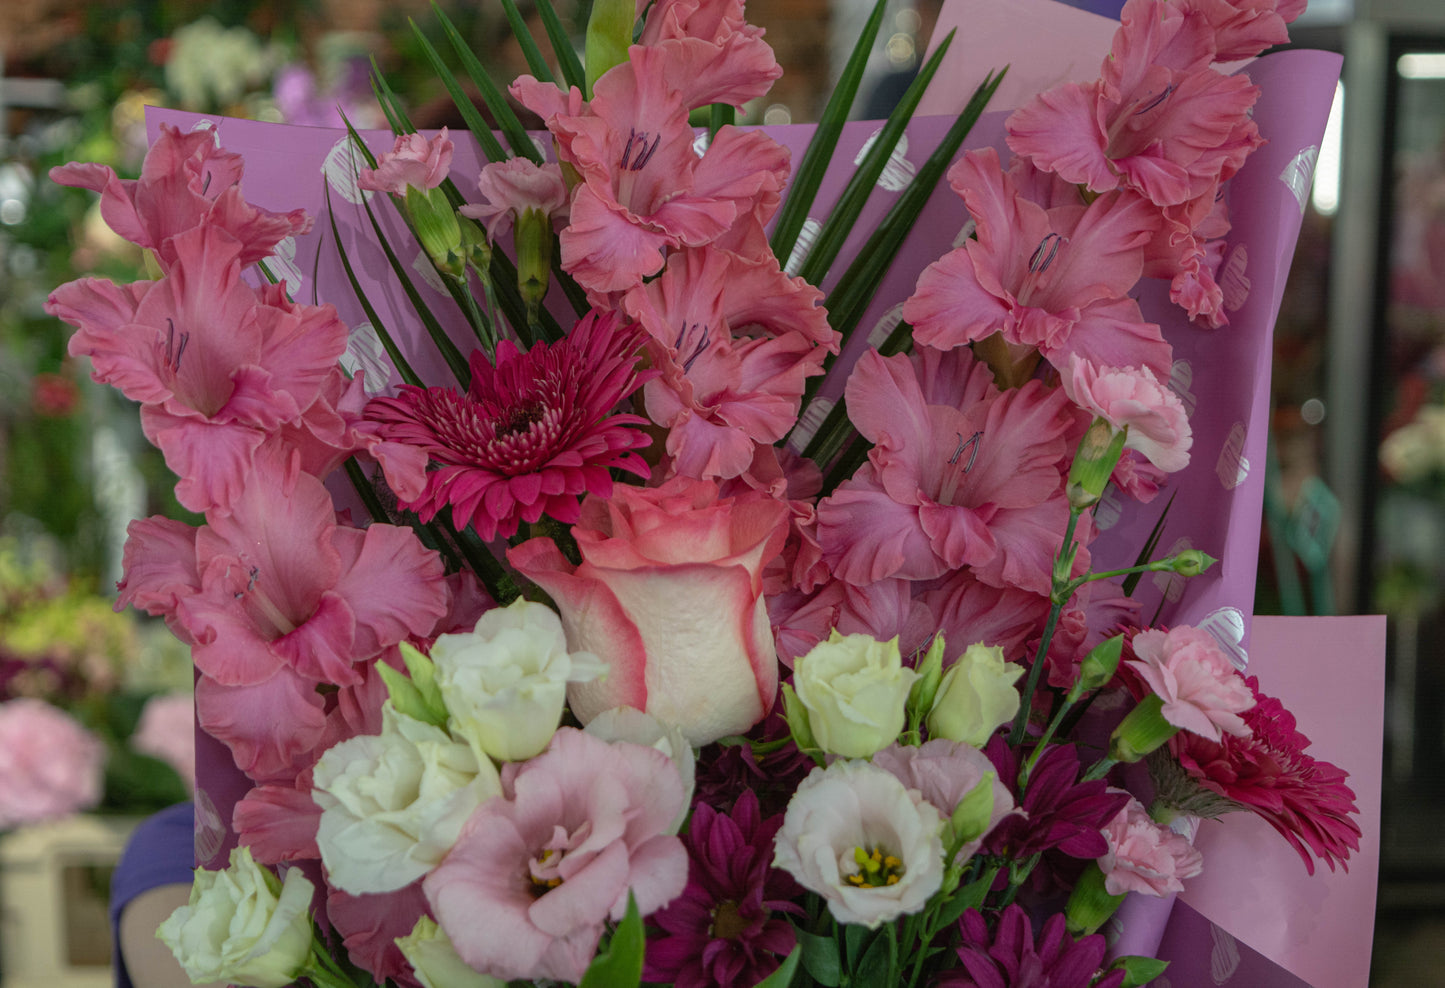 Detaliu buchet cu gladiole roz - aranjament floral elegant - livrare în Reșița